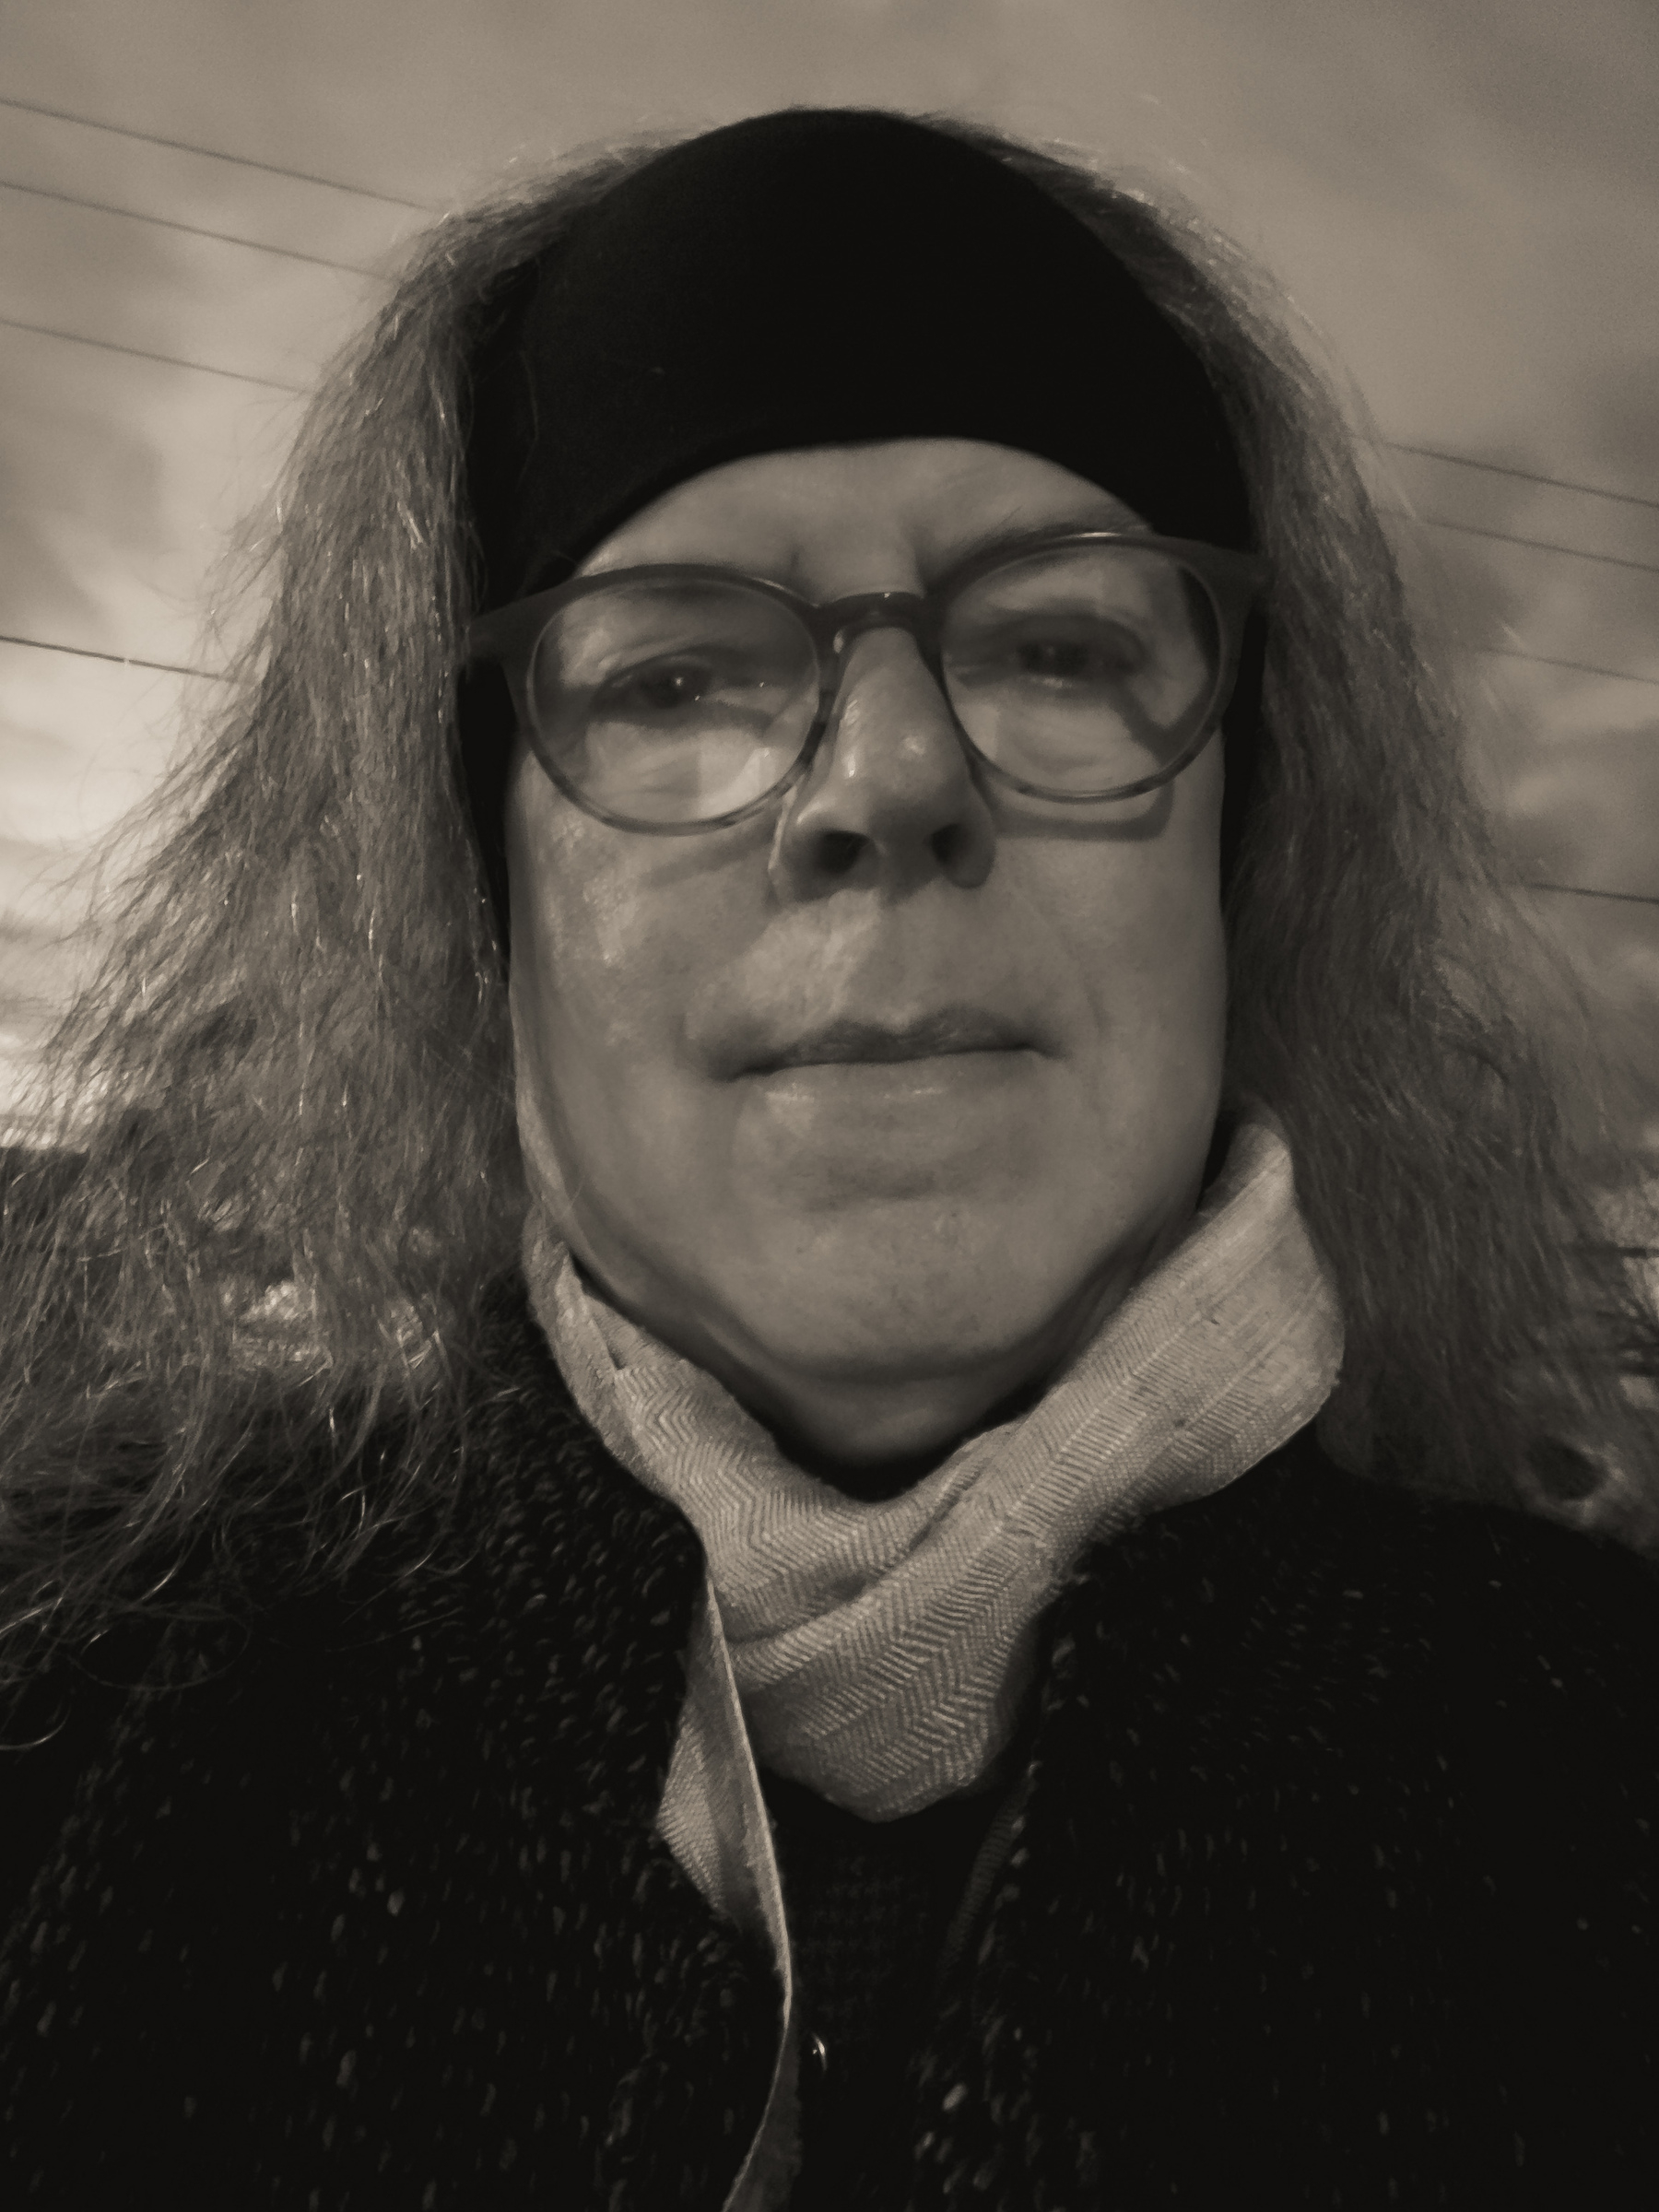 Selfie headshot in warm retro black and white.